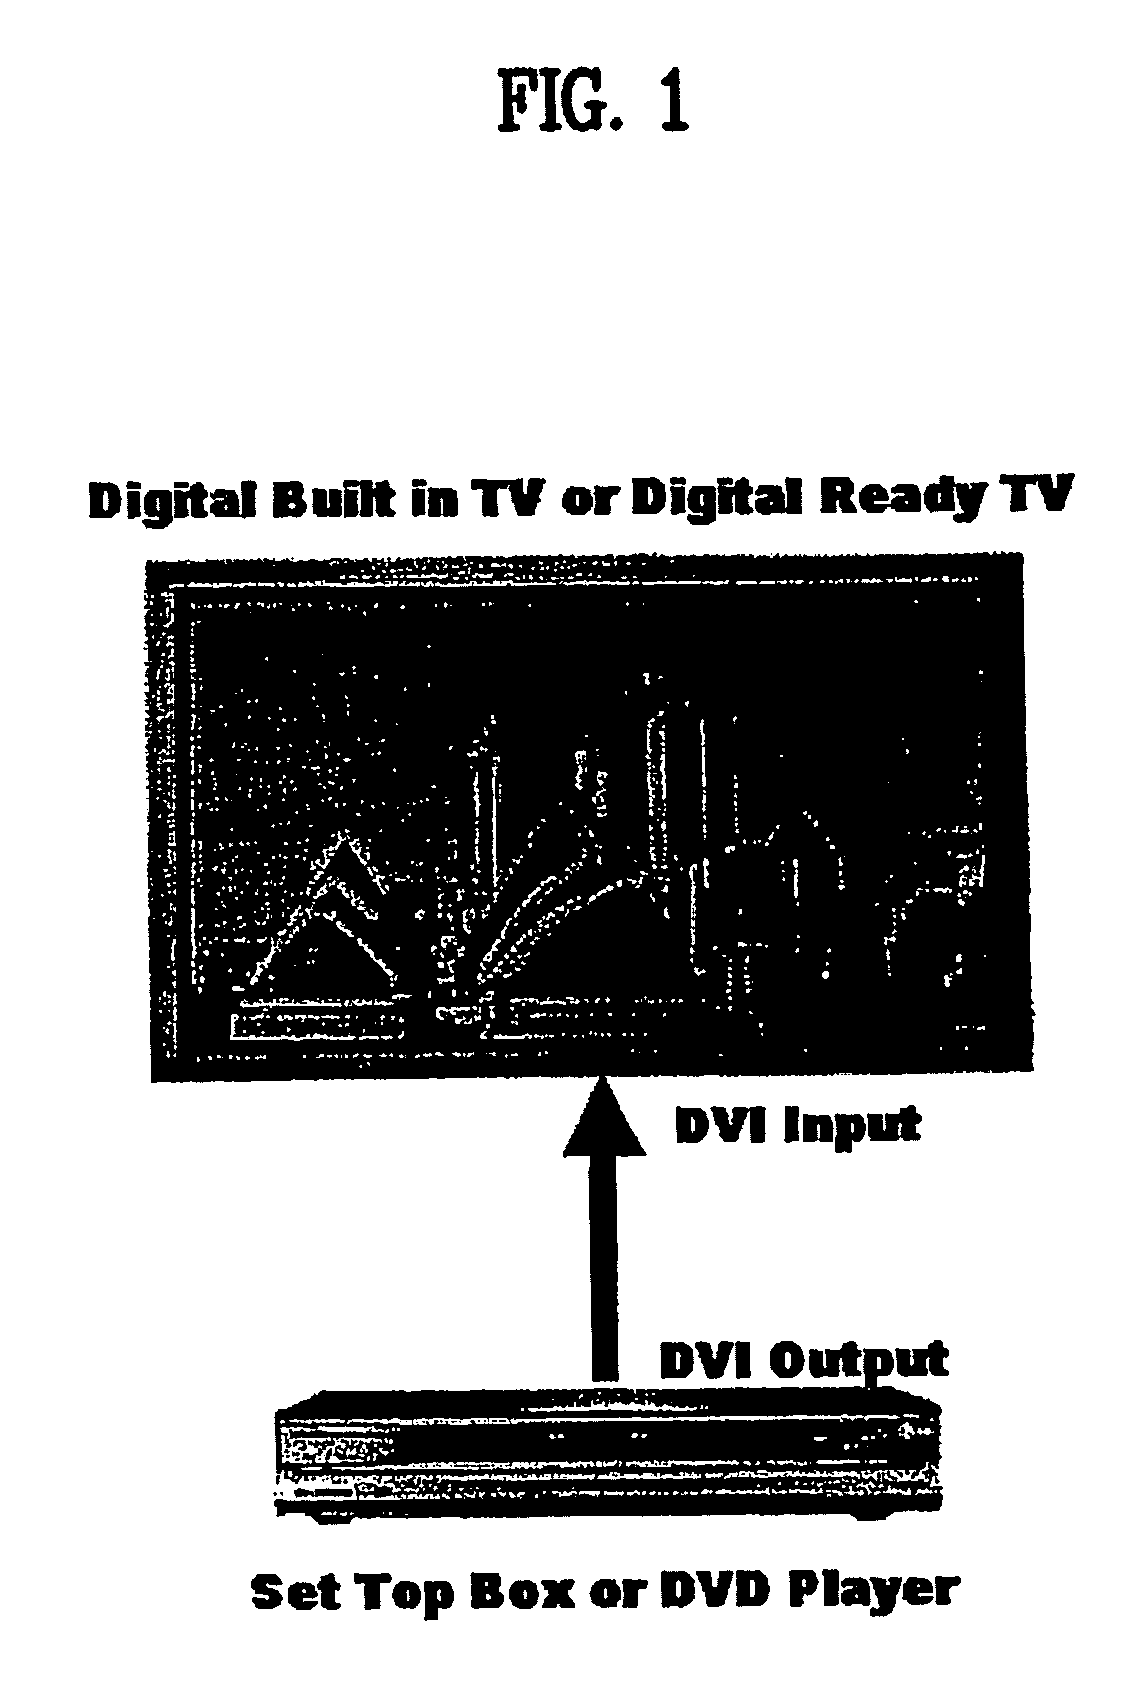 Digital cable TV receiver, diagnostic method for the digital cable TV receiver, and data structure of DVI status report